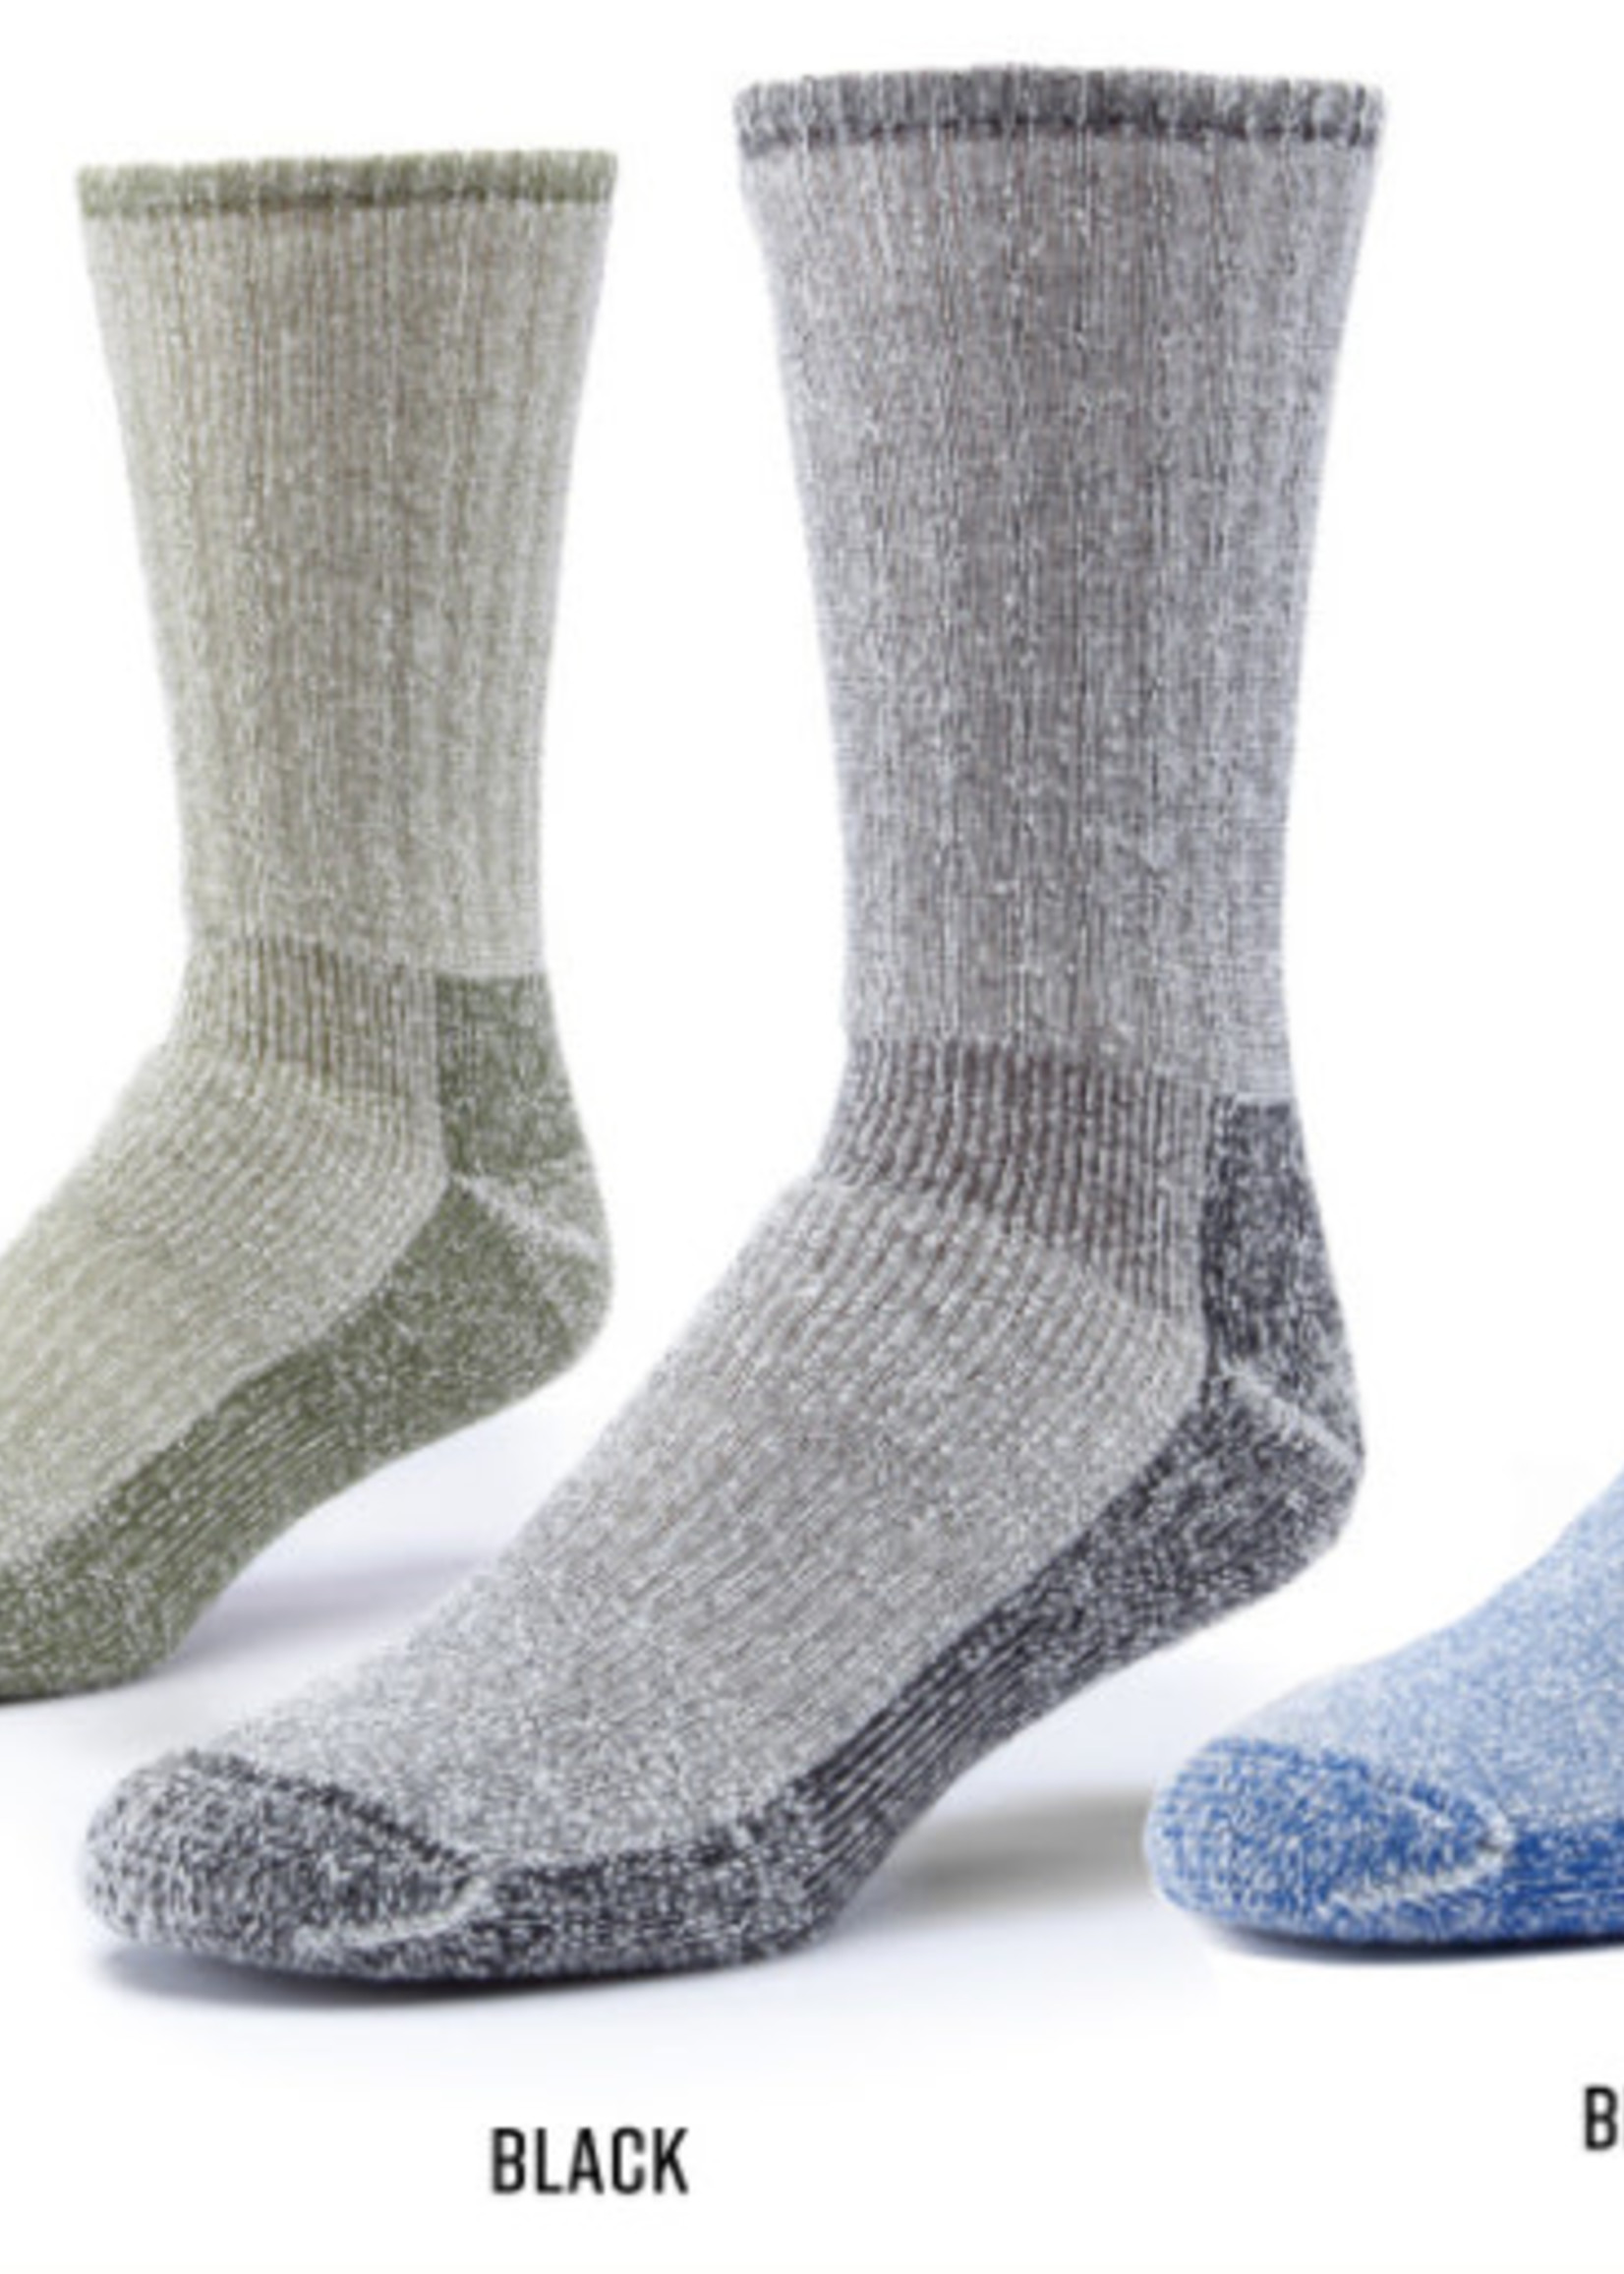 Maggies Organics Merino Wool Hiker Socks